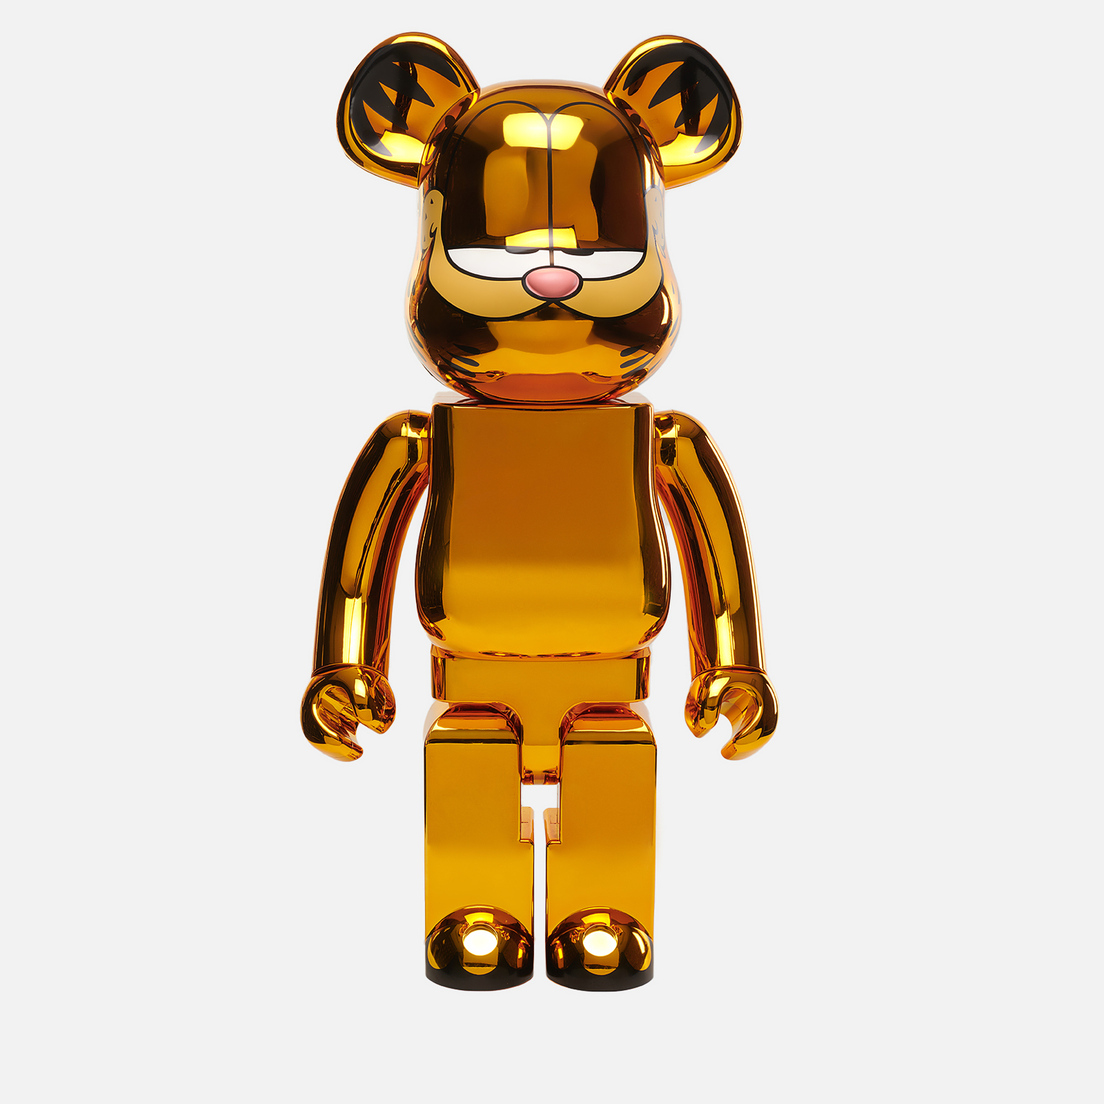 Medicom Toy Игрушка Garfield Gold Chrome 1000%